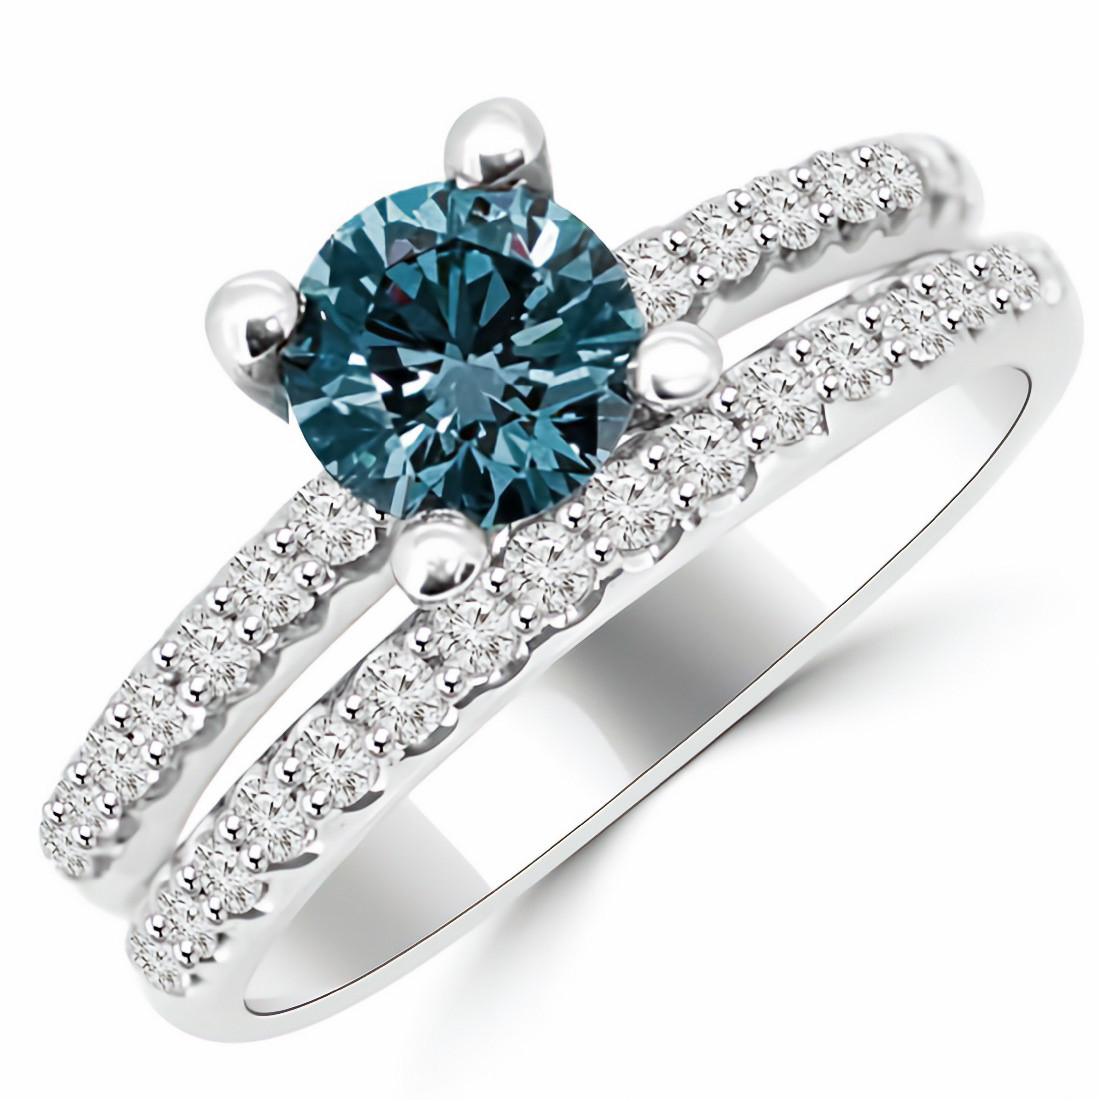 Matching Blue Diamond Engagement Wedding Ring